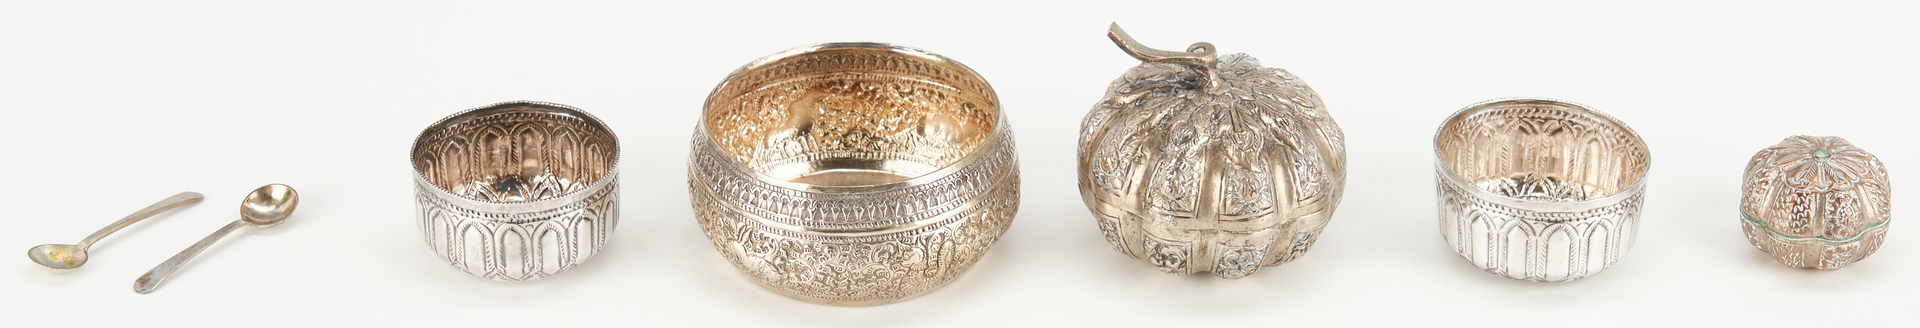 Lot 2: 8 Asian Items, Incl. Bronze Buddha & Burmese Silver